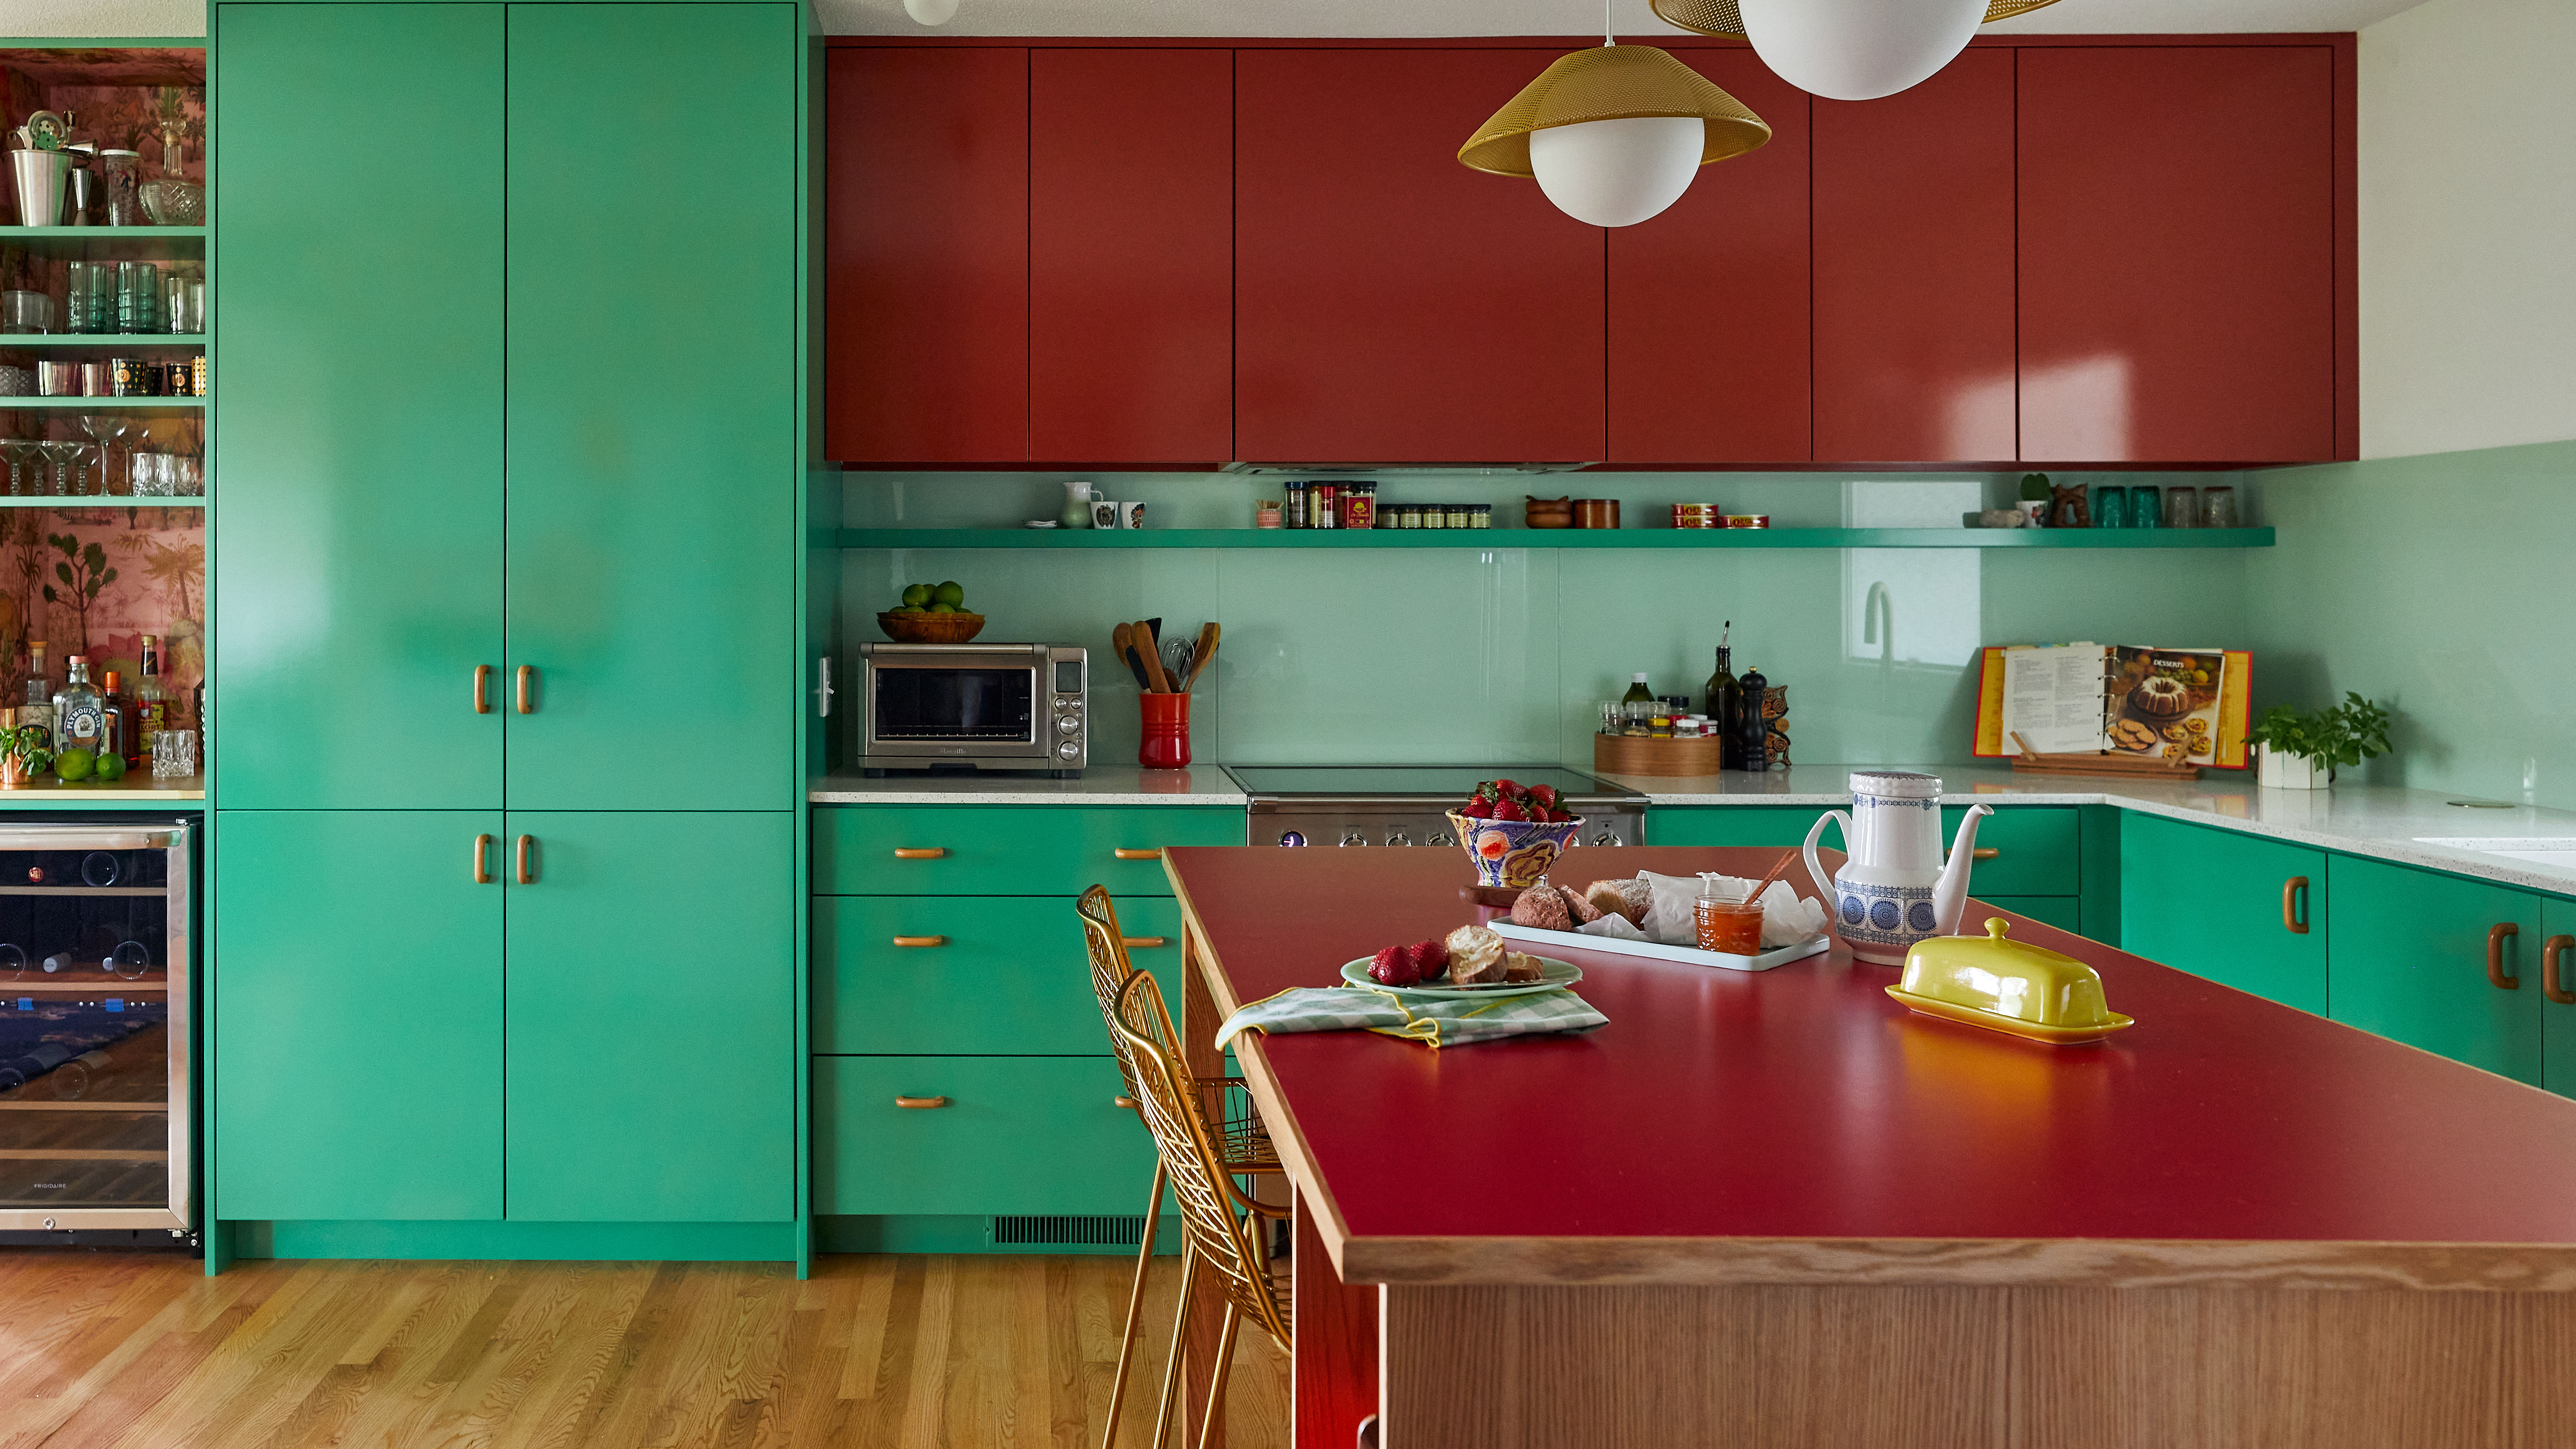 Turquoise Kitchen Decor & Appliances  Turquoise kitchen, Turquoise kitchen  decor, Teal kitchen